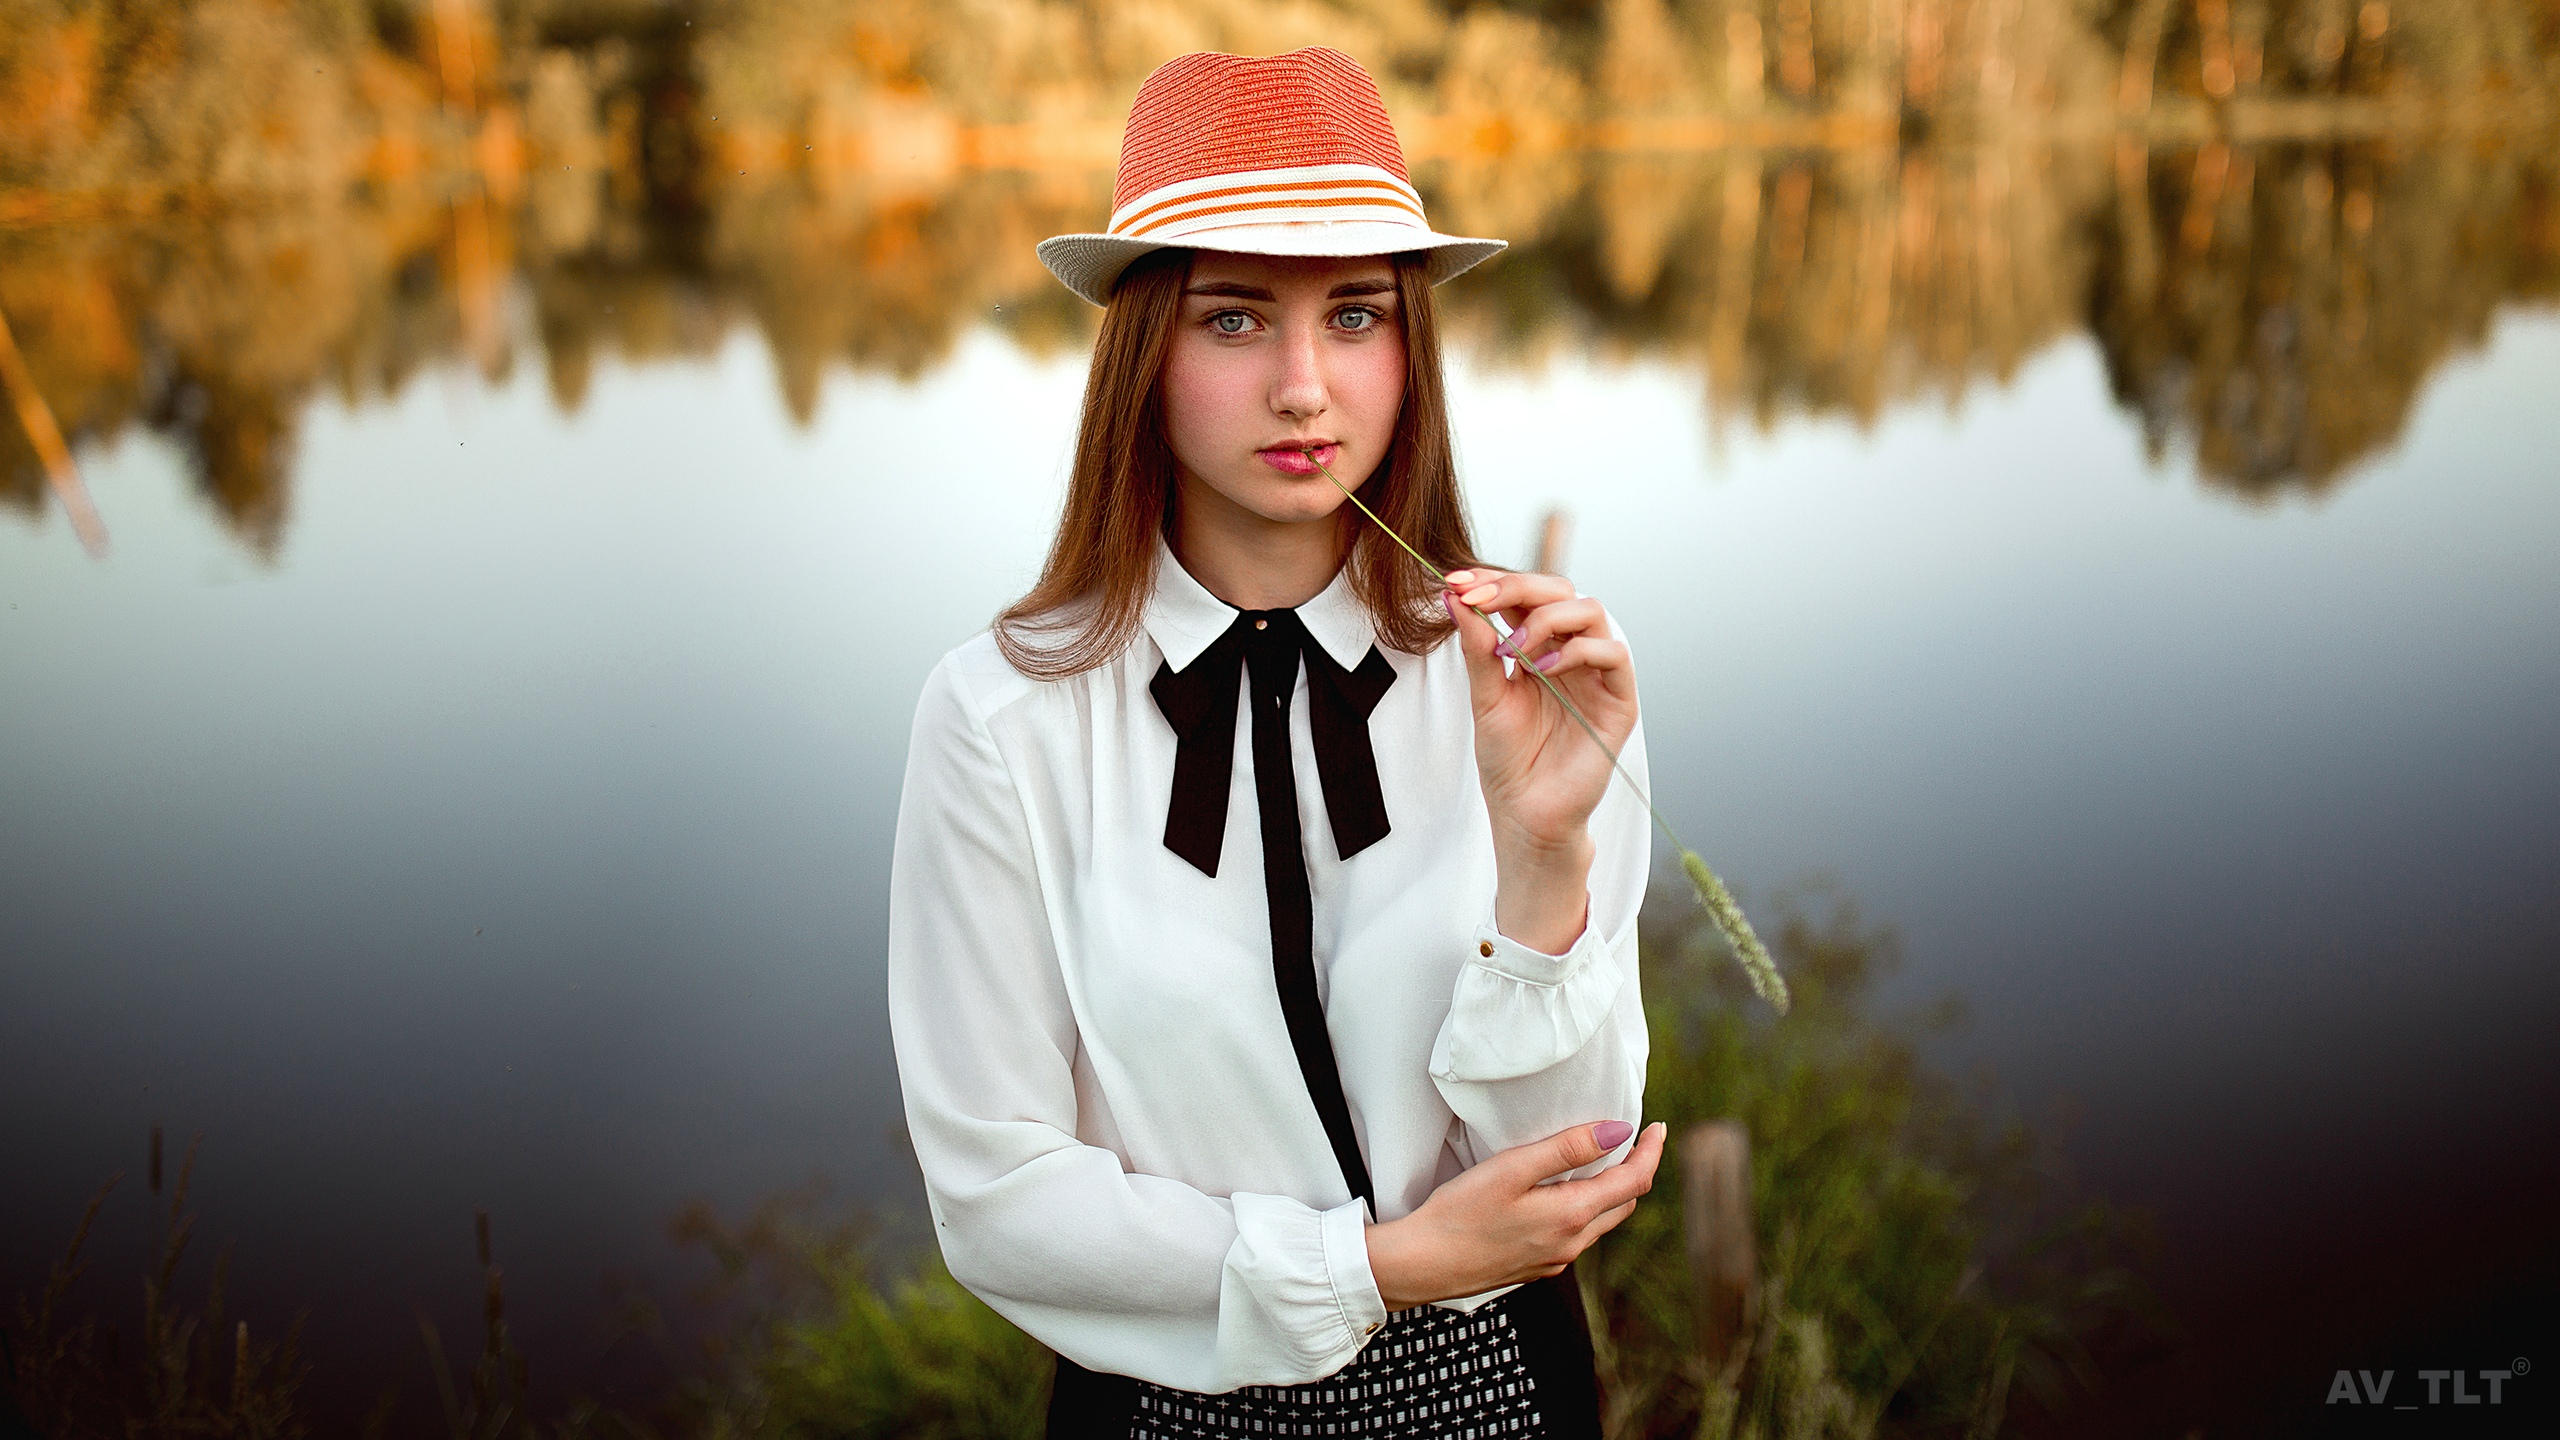 Aleksandr Suhar Women Model Portrait Outdoors Depth Of Field Looking At Viewer Lagoon Water Shirt Pa 2560x1440